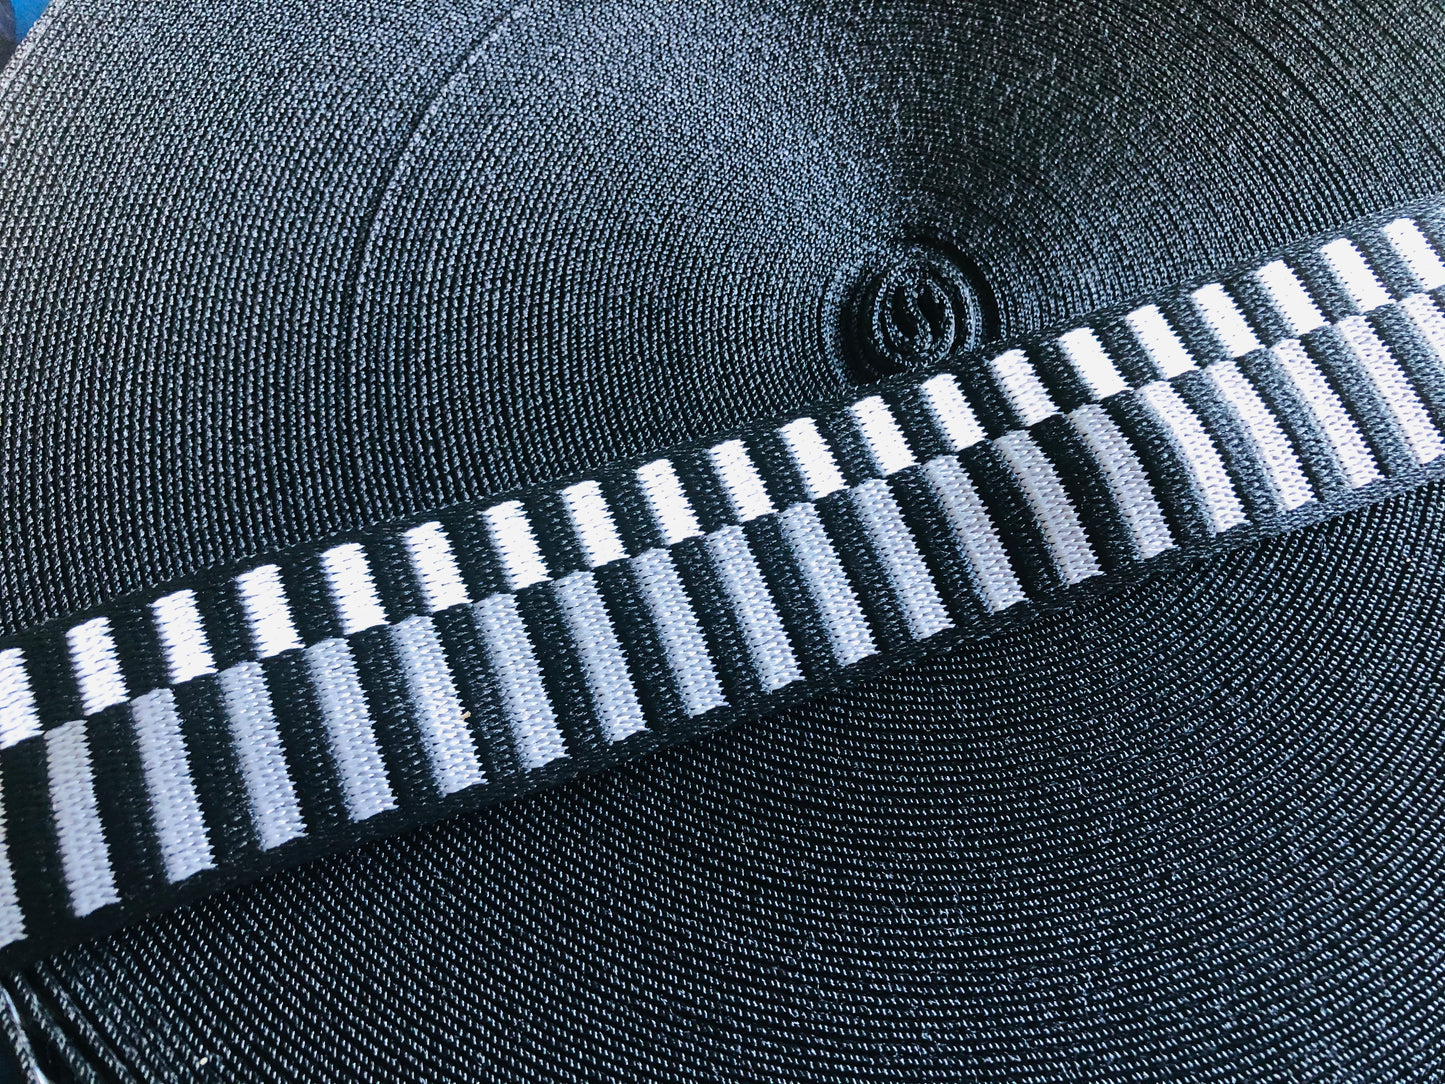 3 metre of piano keys patten strap, 3.8cm/1.5 inch pattern webbing for tote bags, adjustable crossbody straps, handmade backpacks, heavy duty handles  by the meter